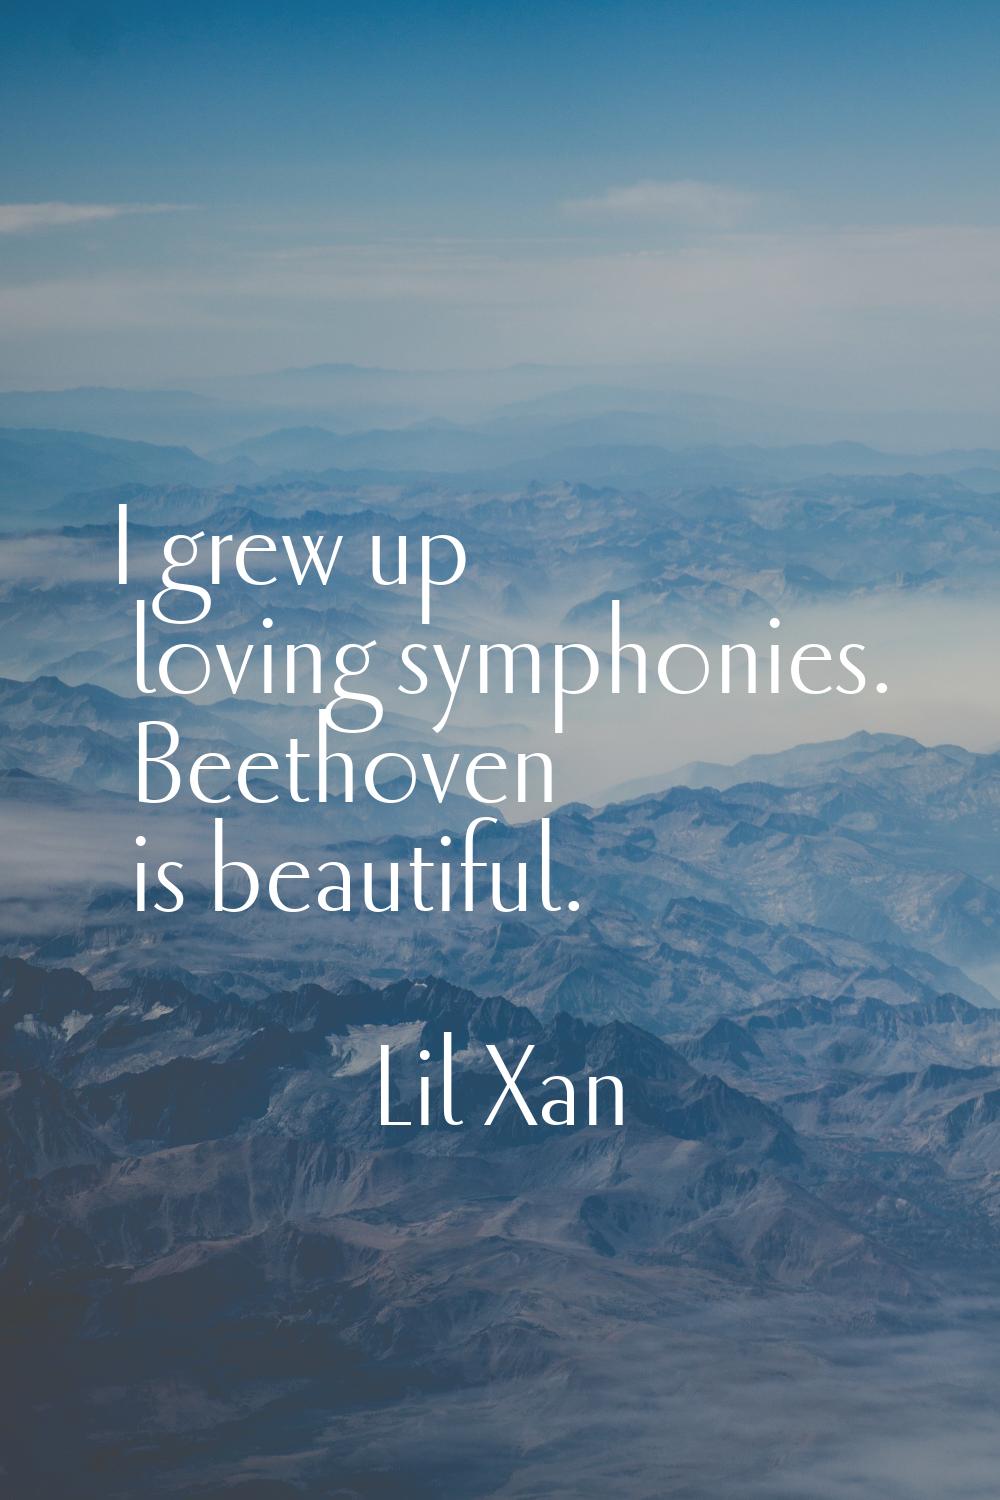 I grew up loving symphonies. Beethoven is beautiful.